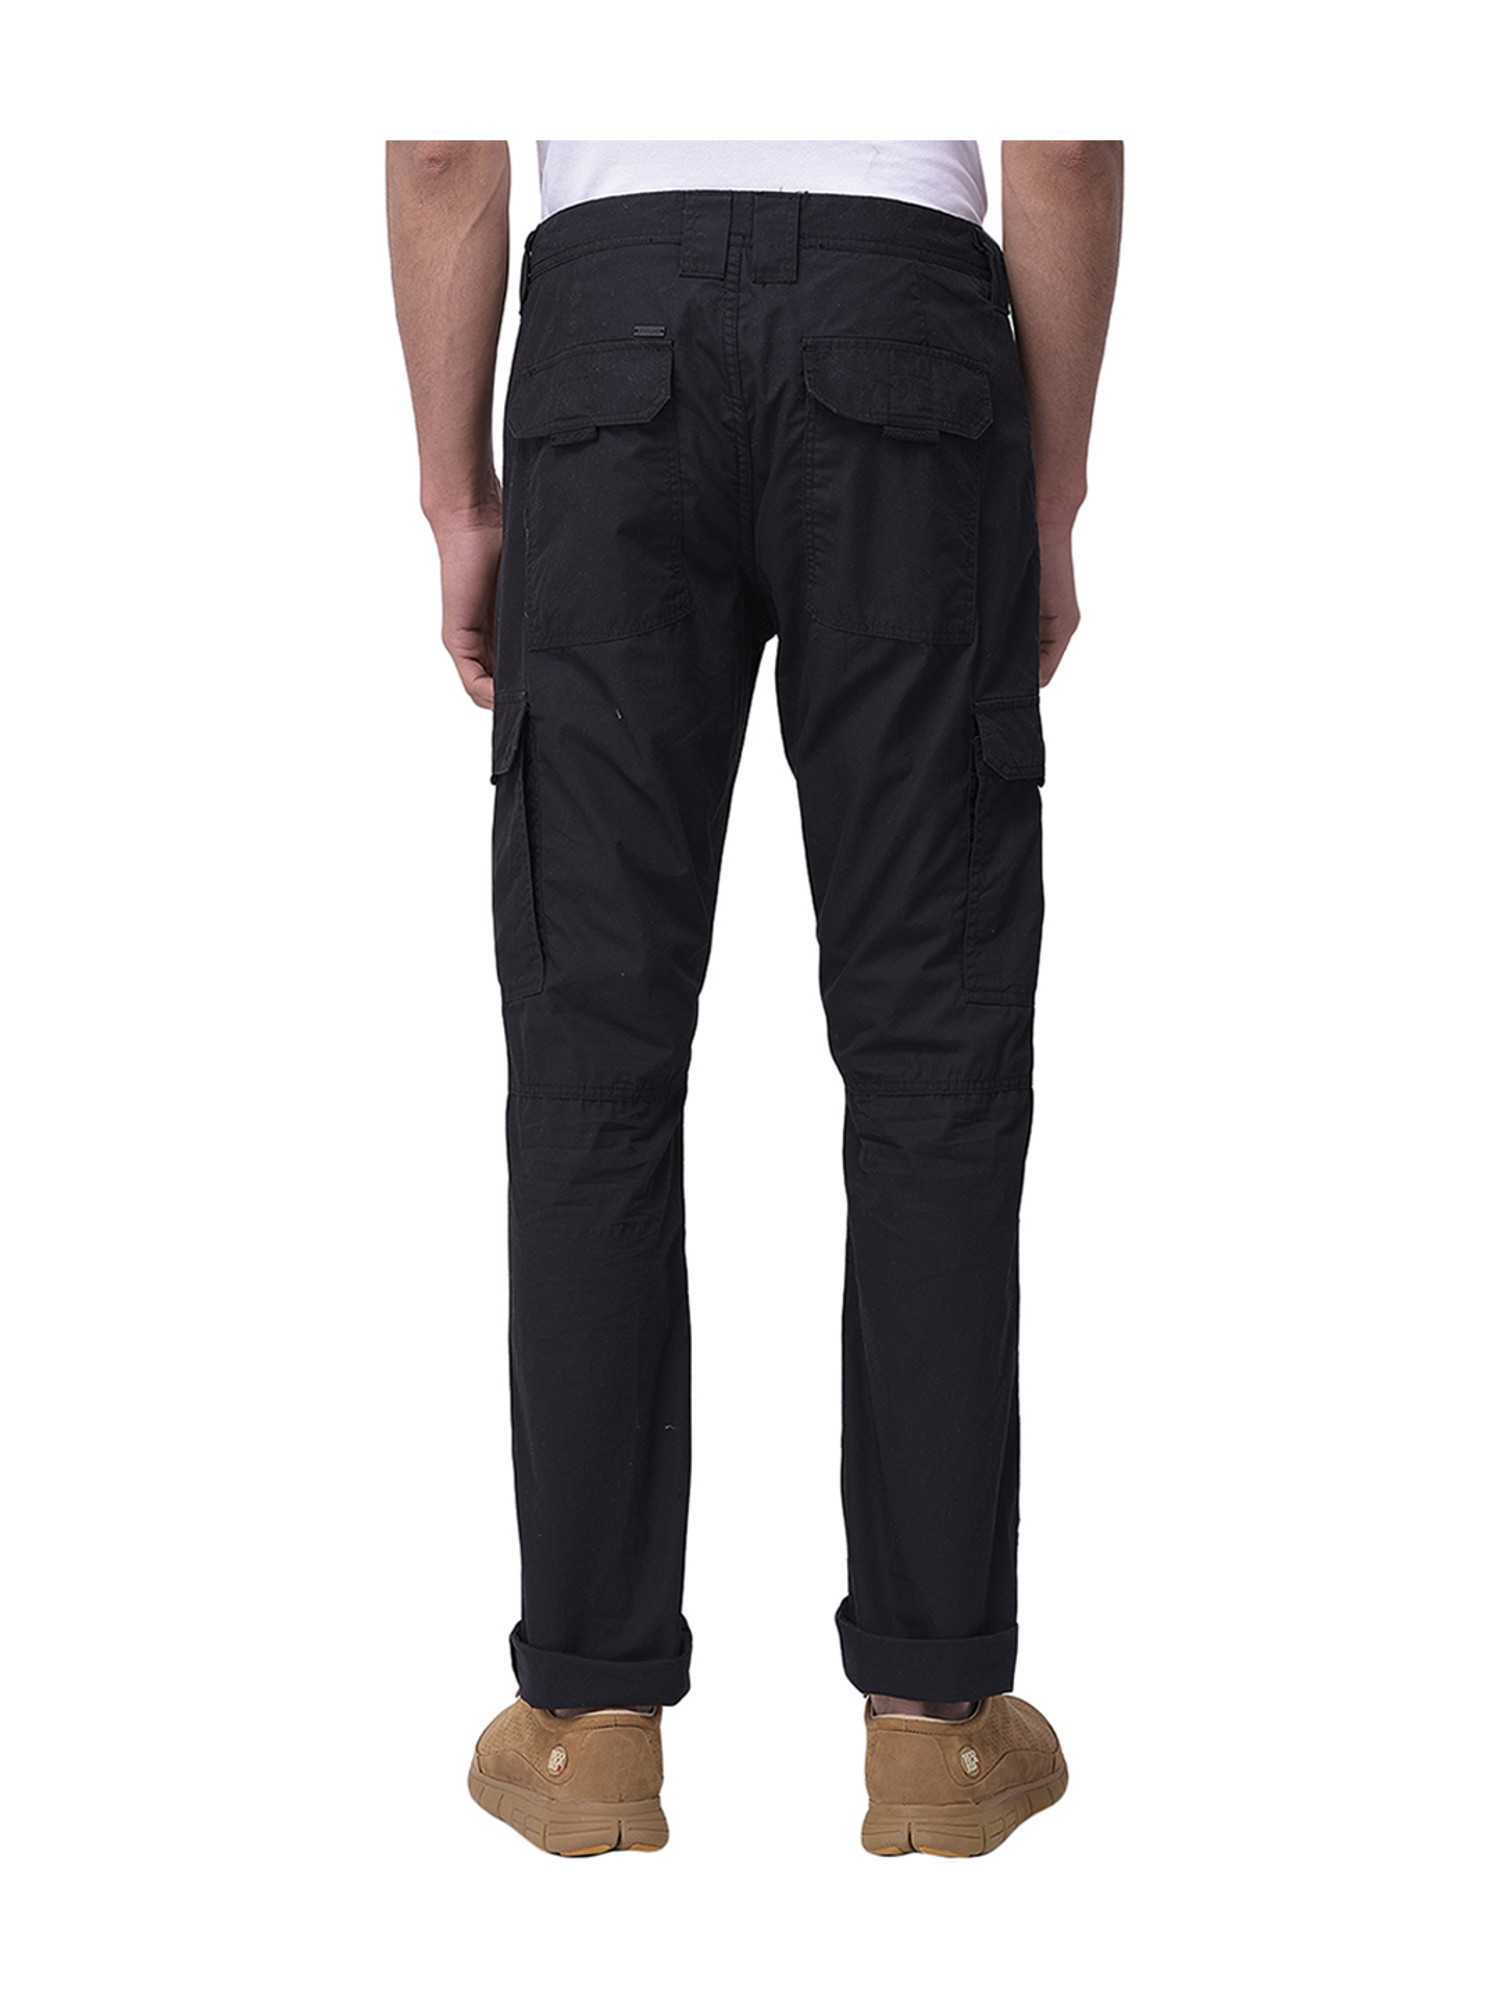 Buy tbase Mens Black Solid Cargo Pants for Men Online India